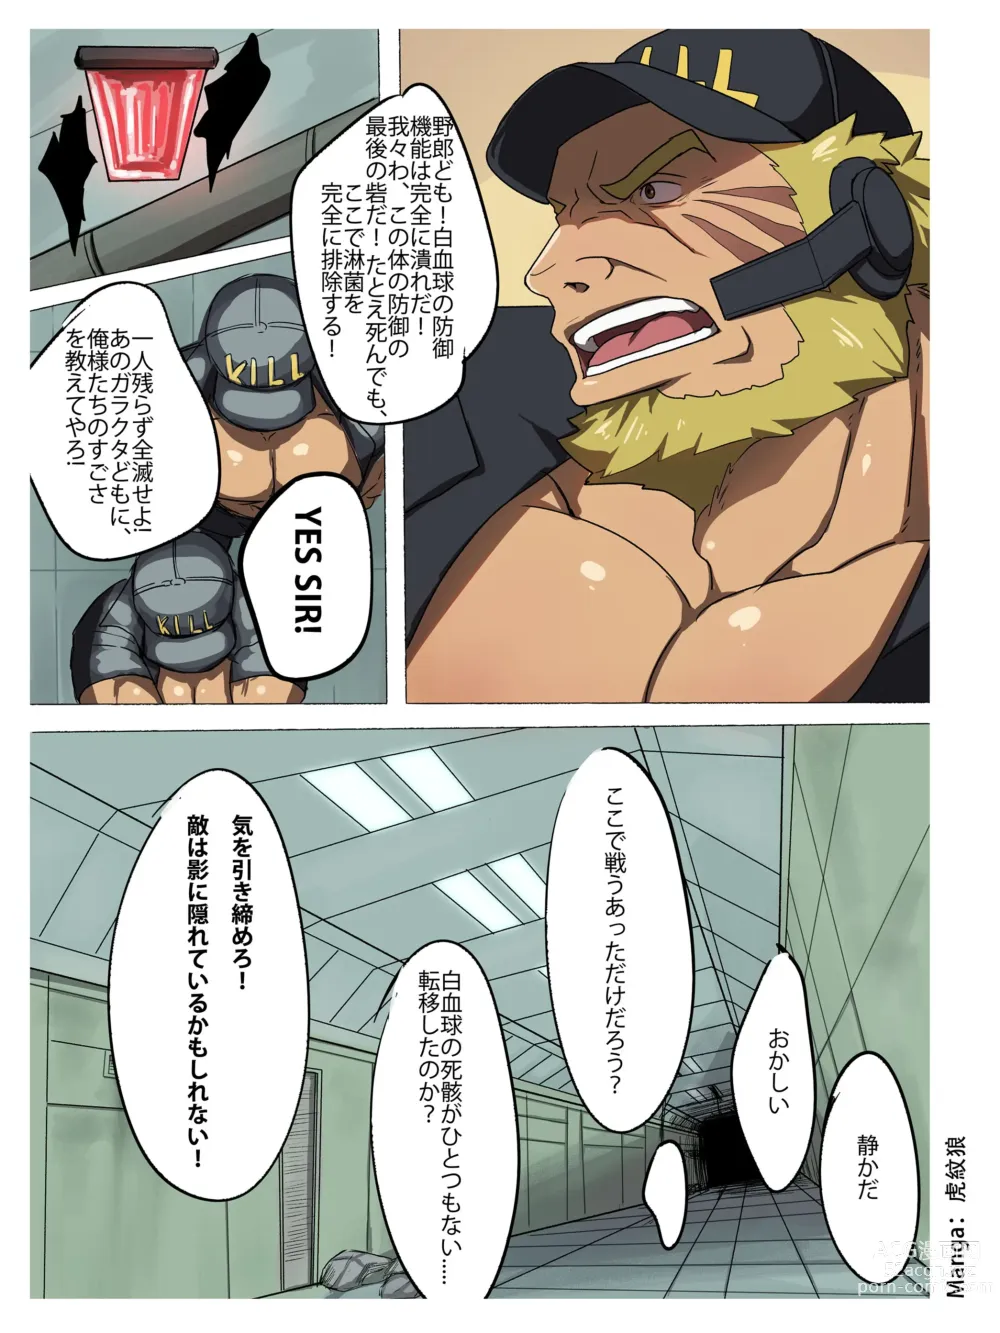 Page 59 of doujinshi BEHEAD